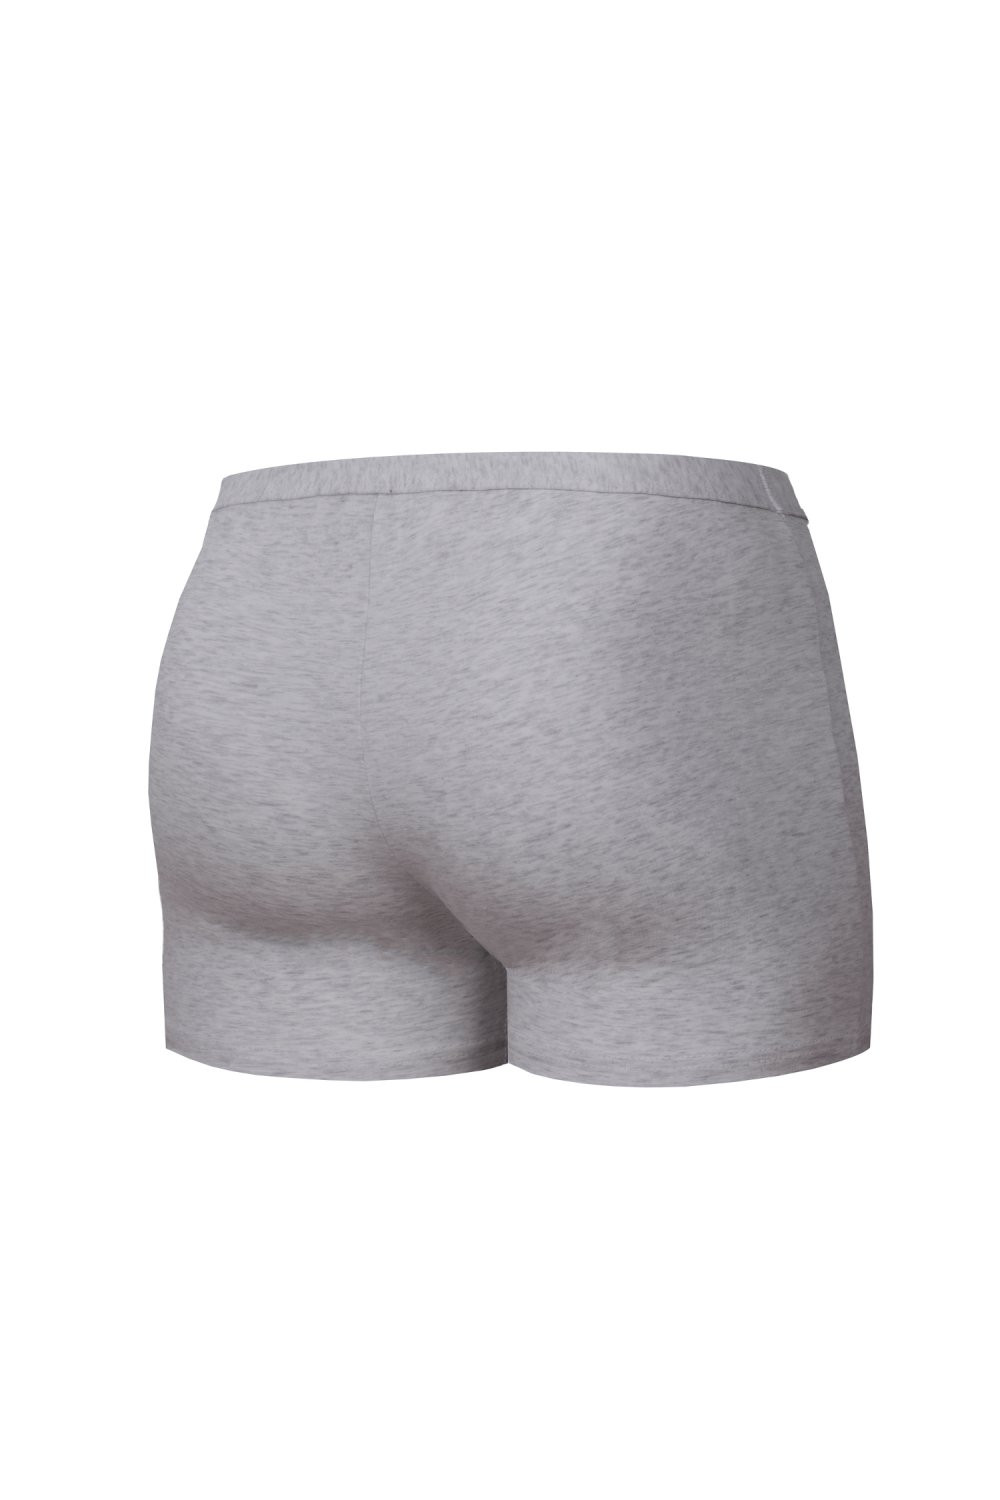 Pánské boxerky 223 Authentic mini grey - CORNETTE Barva: šedá, Velikost: XL